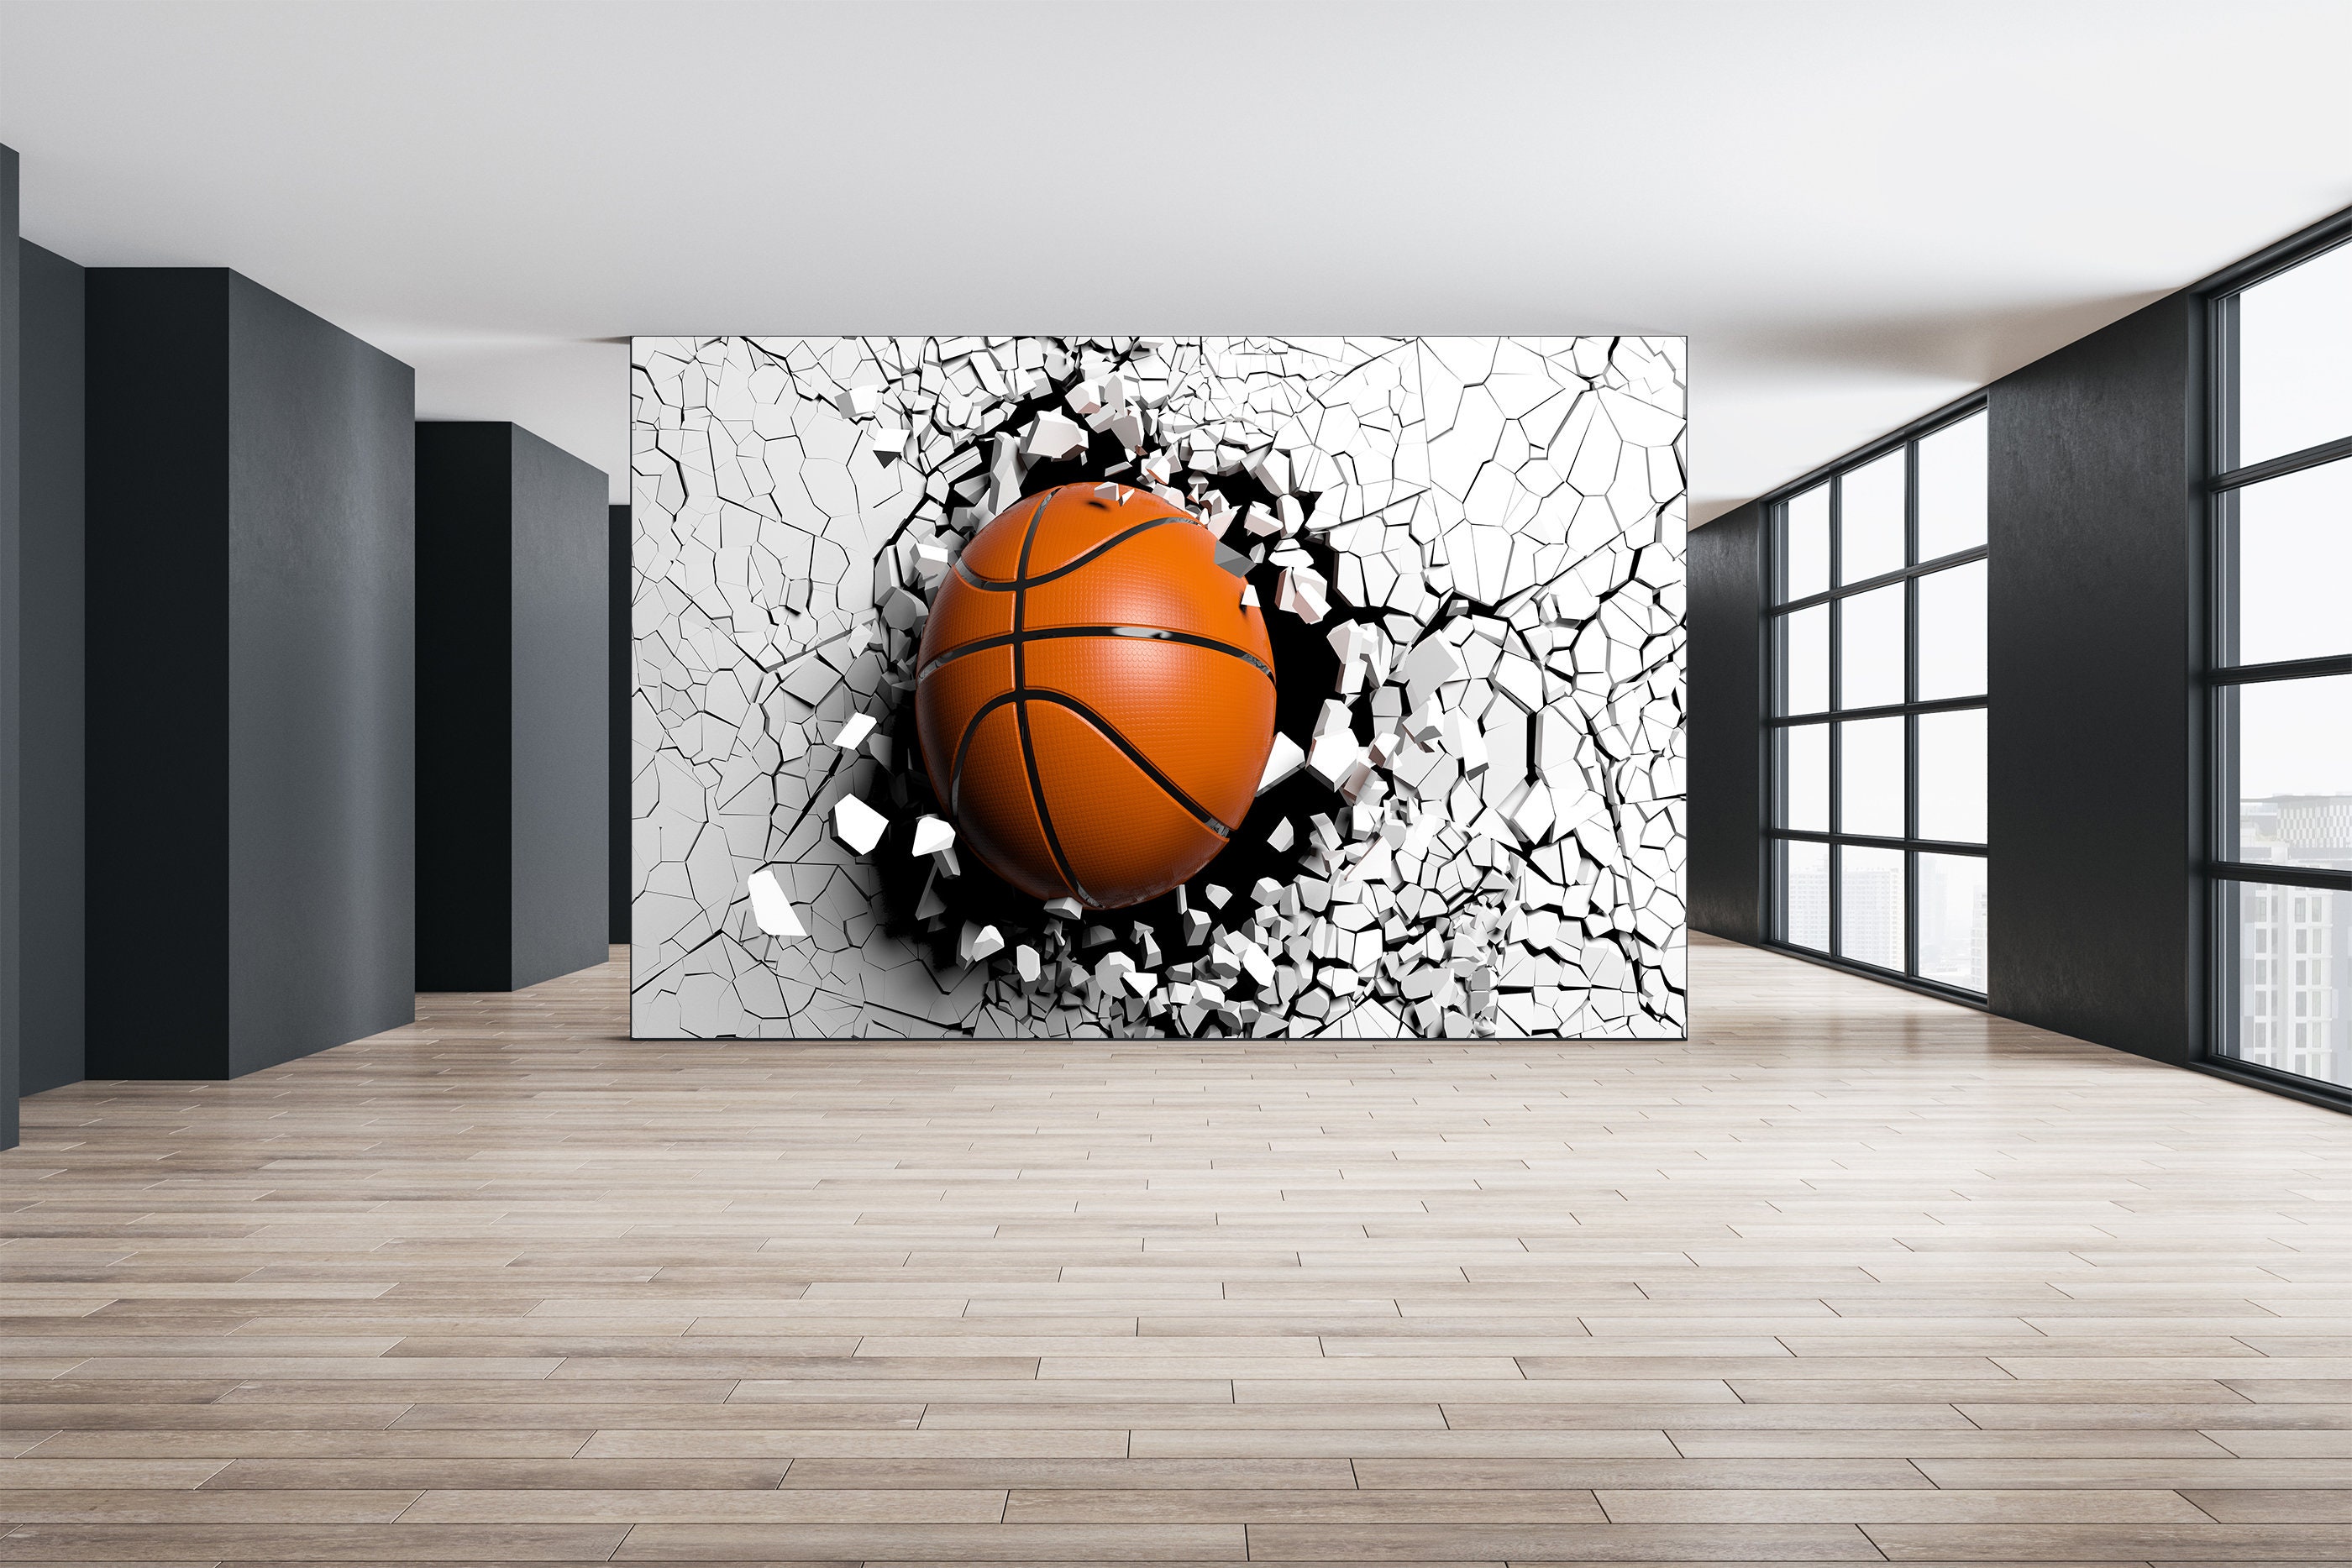 Photomural Basketball Ball Destroying The Wall Smooth Vinyl